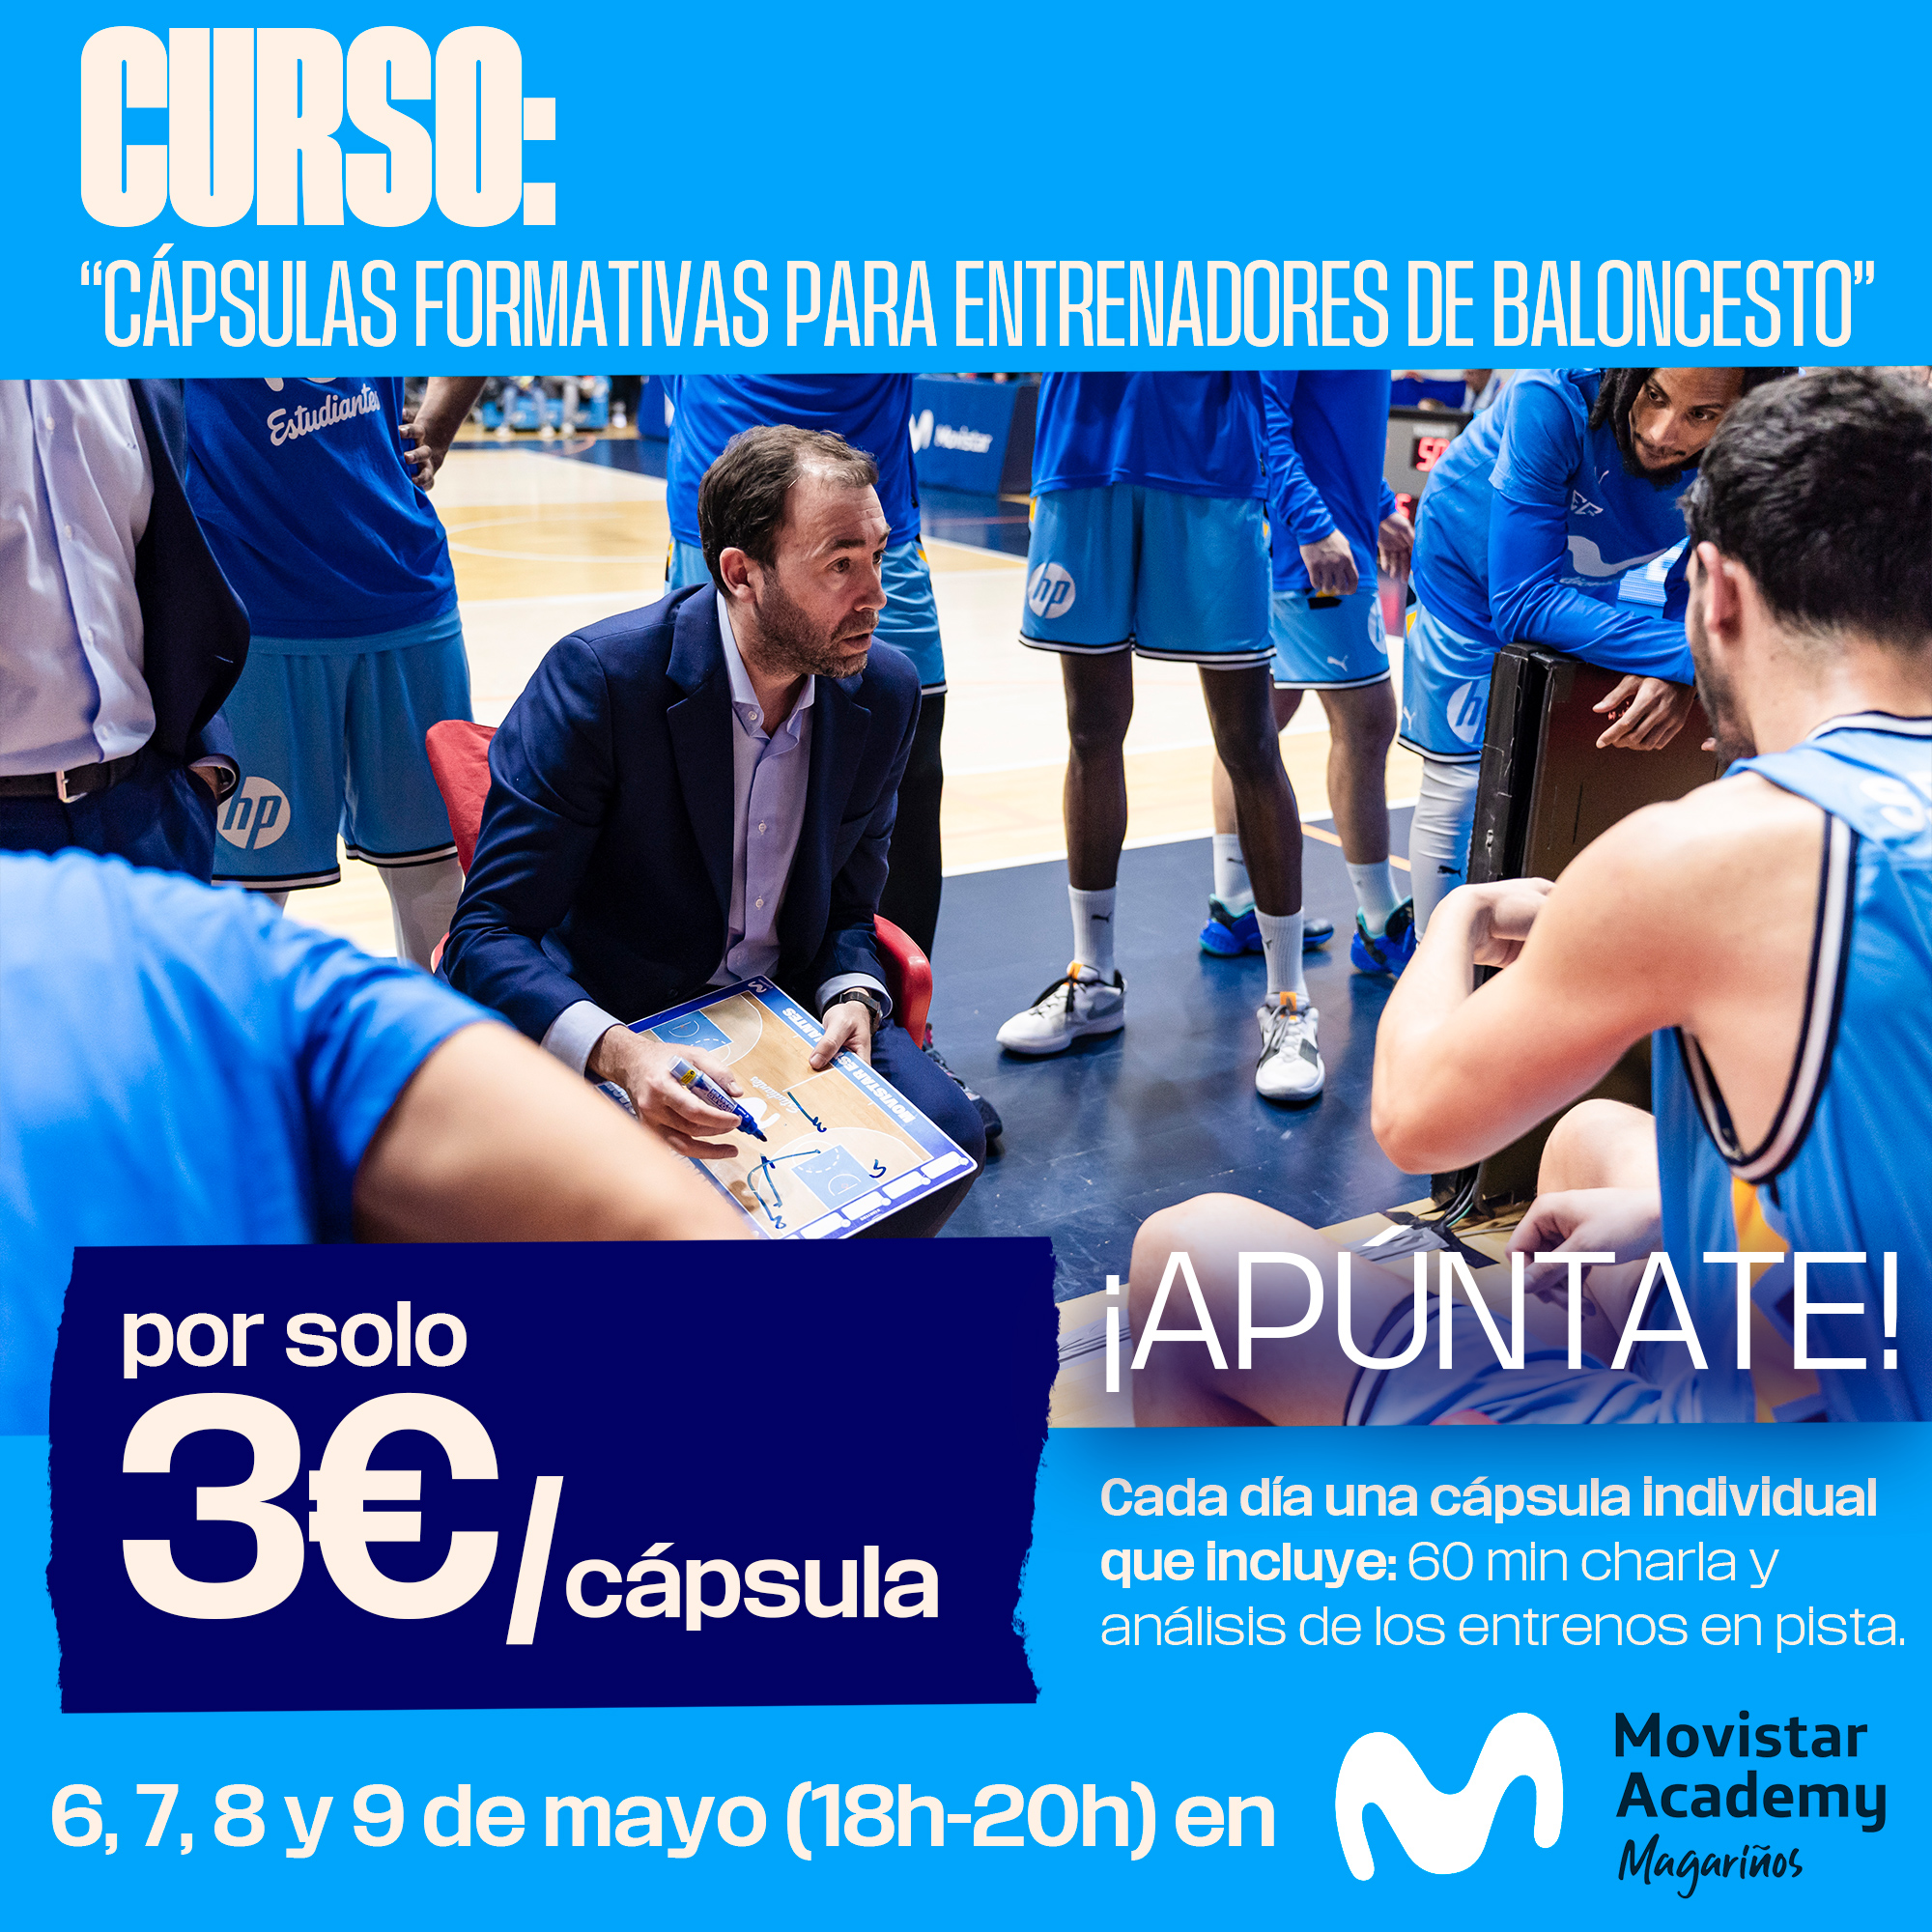 Curso «Cápsulas formativas para entrenadores de baloncesto» por solo 3 euros la cápsula